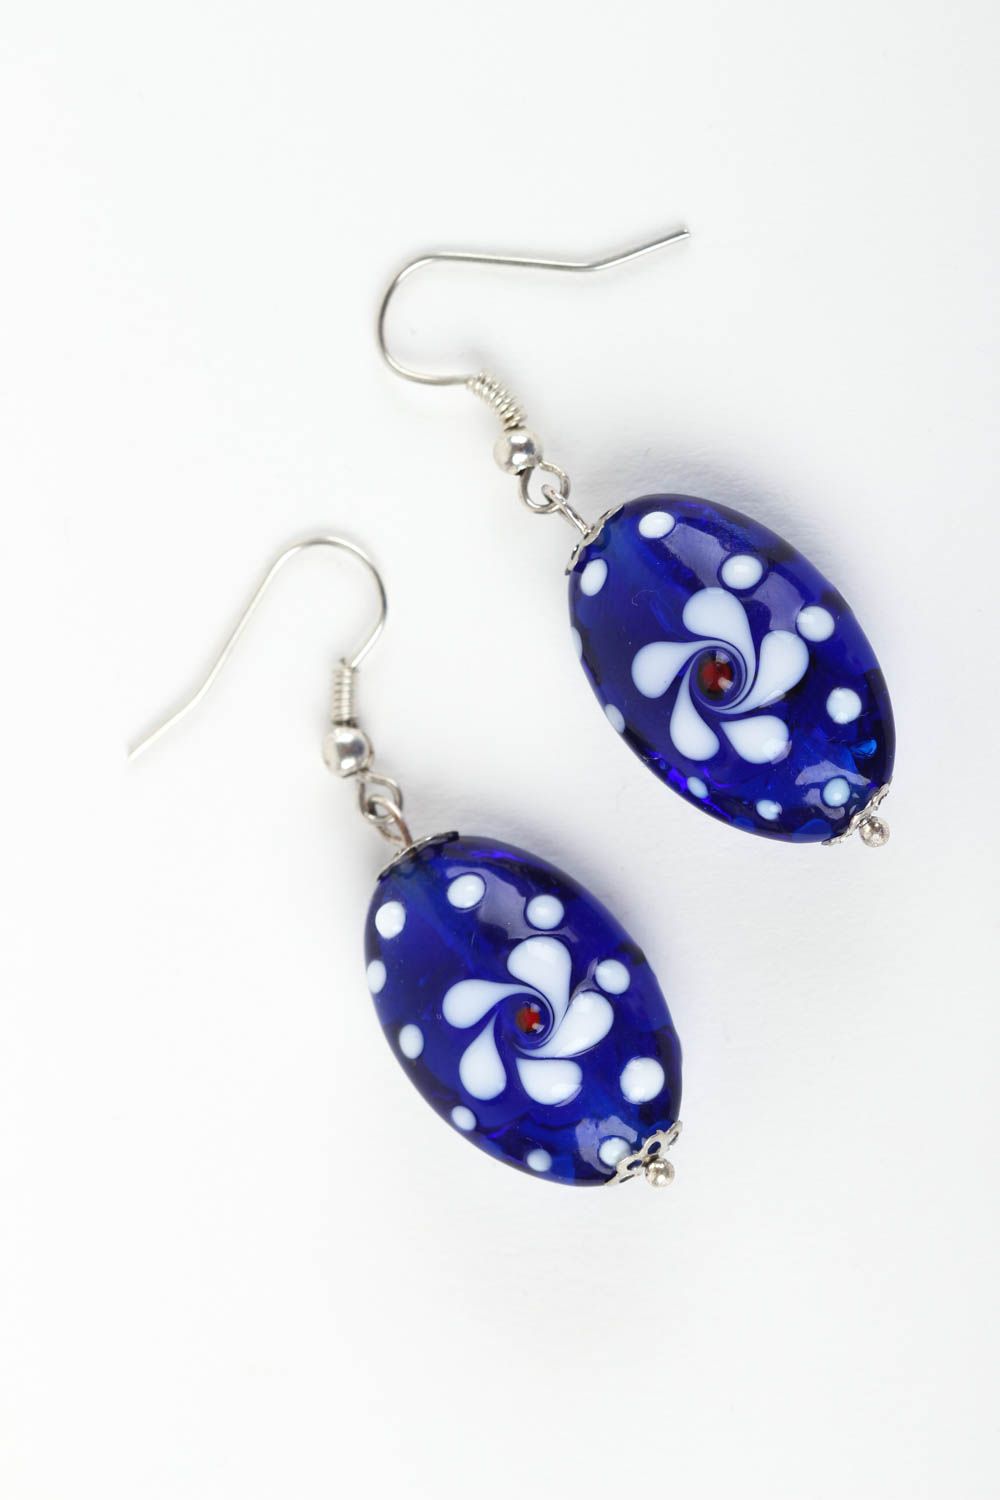 Beautiful handmade glass earrings handmade jewellery glass art gifts for her photo 2